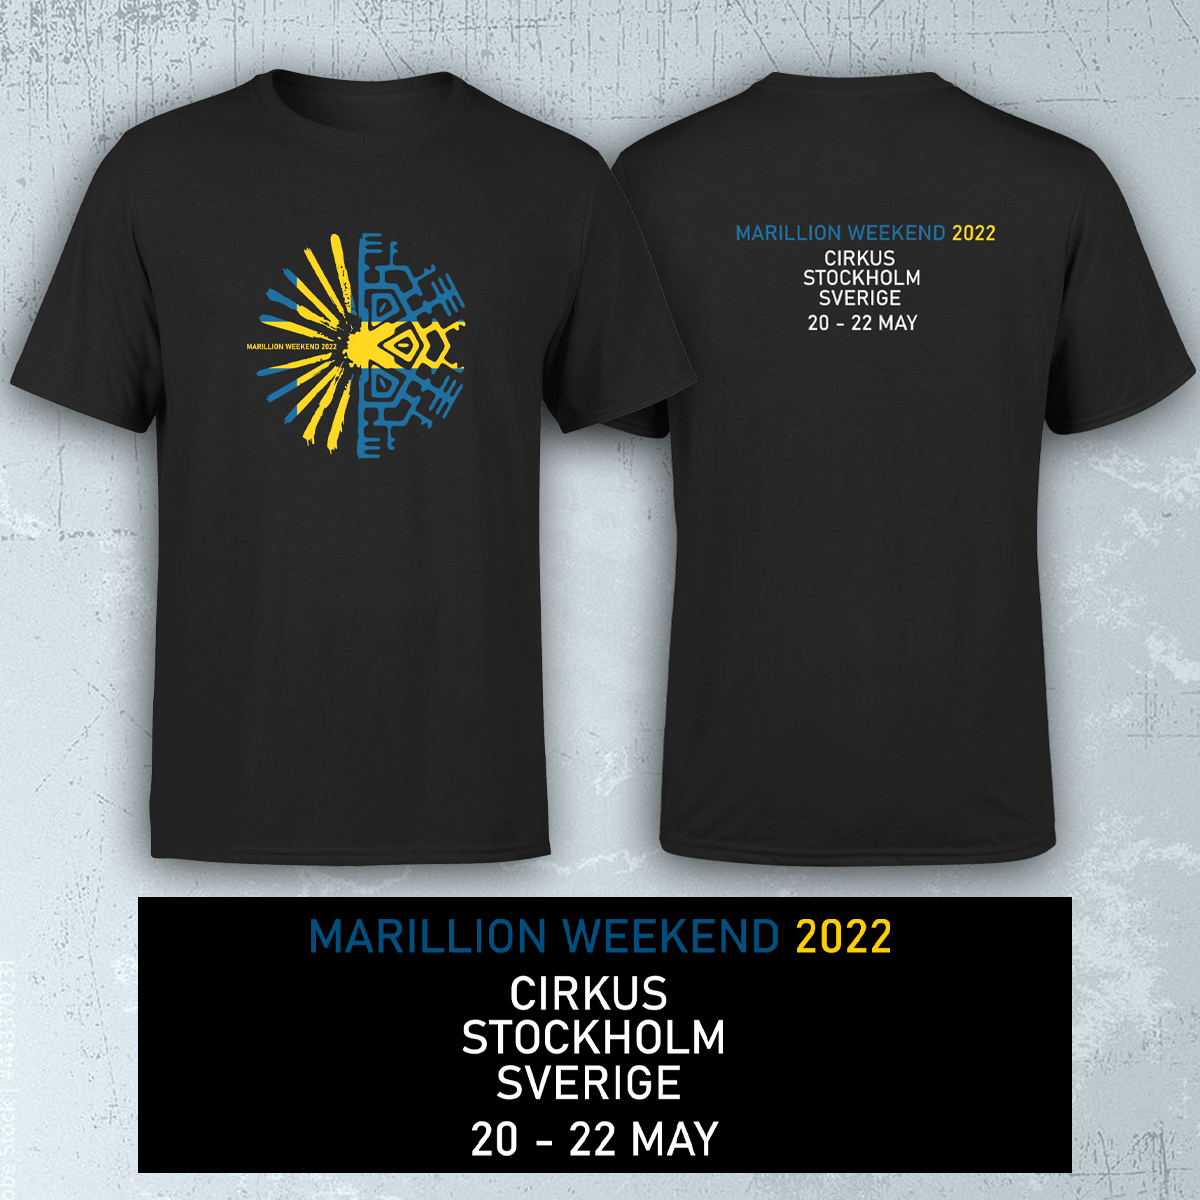 MW 2022 - Sweden Men's Men's Black T-Shirt